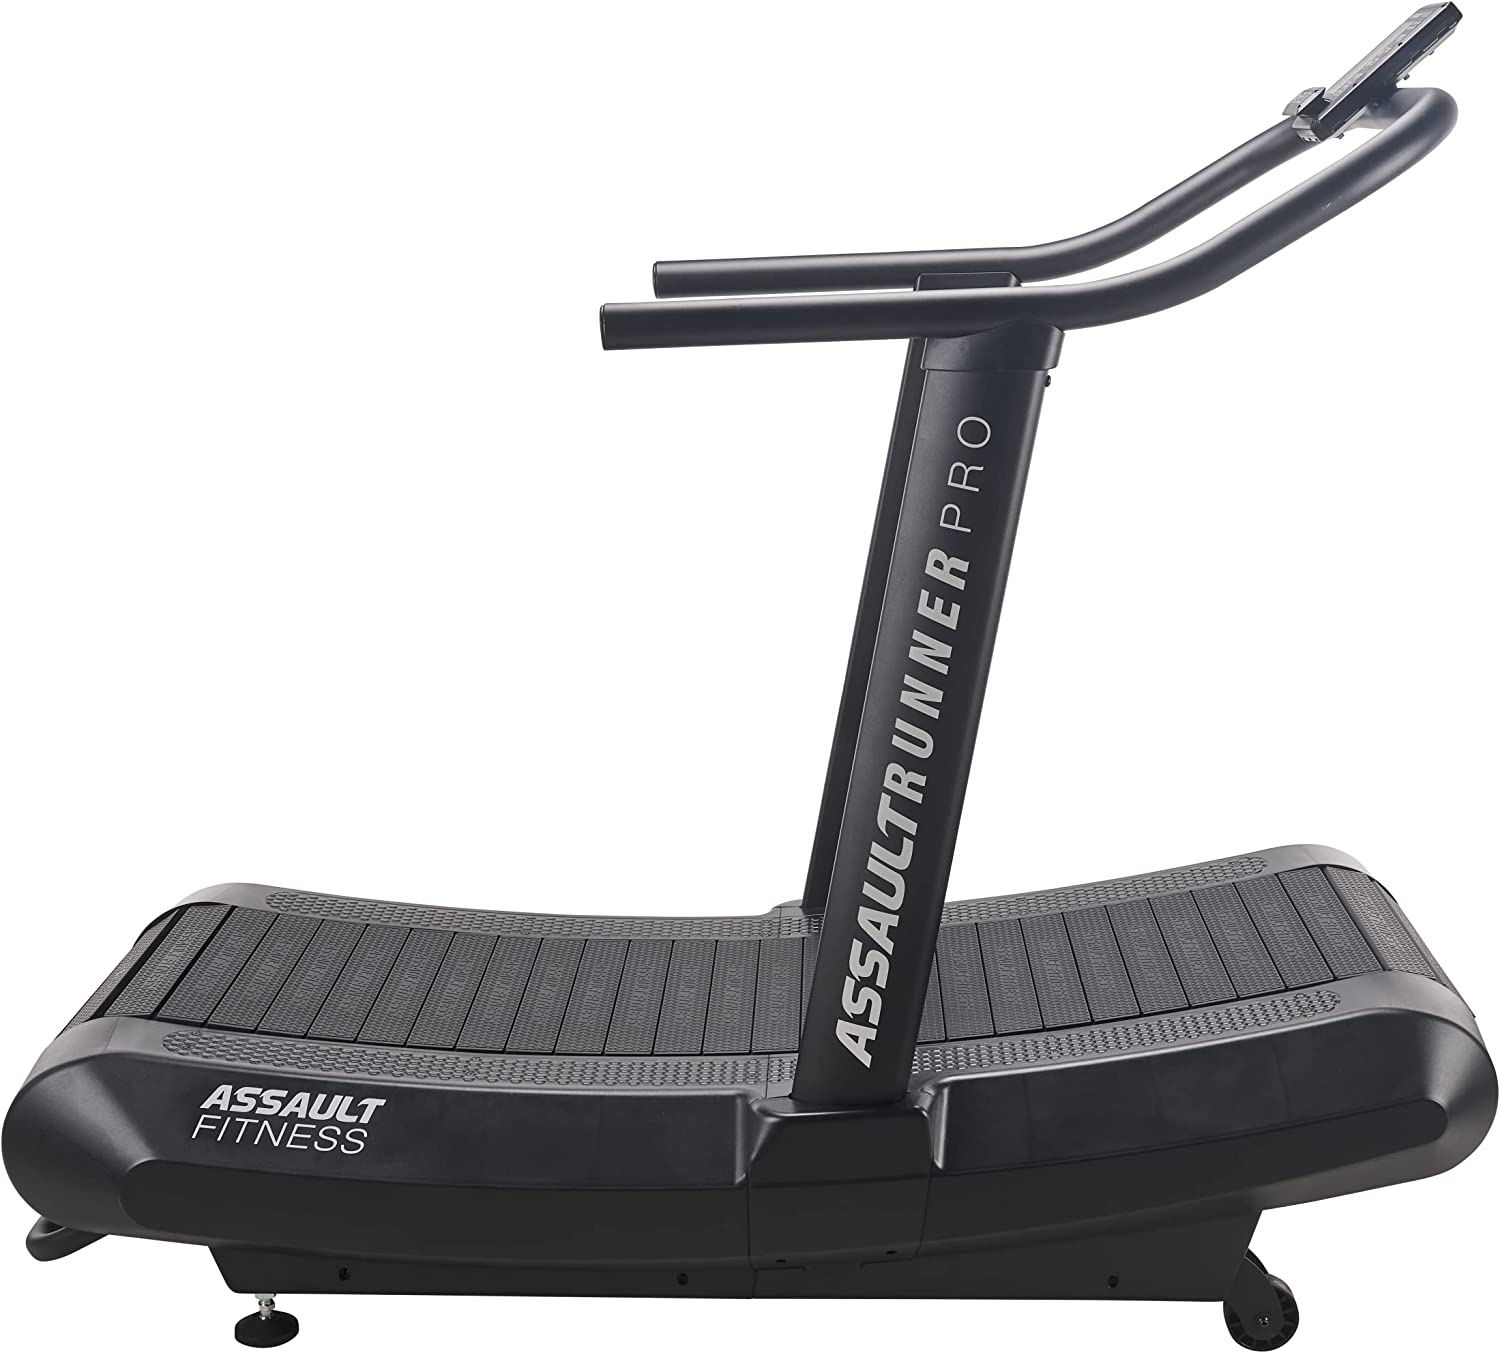 AssaultRunner Pro Treadmill